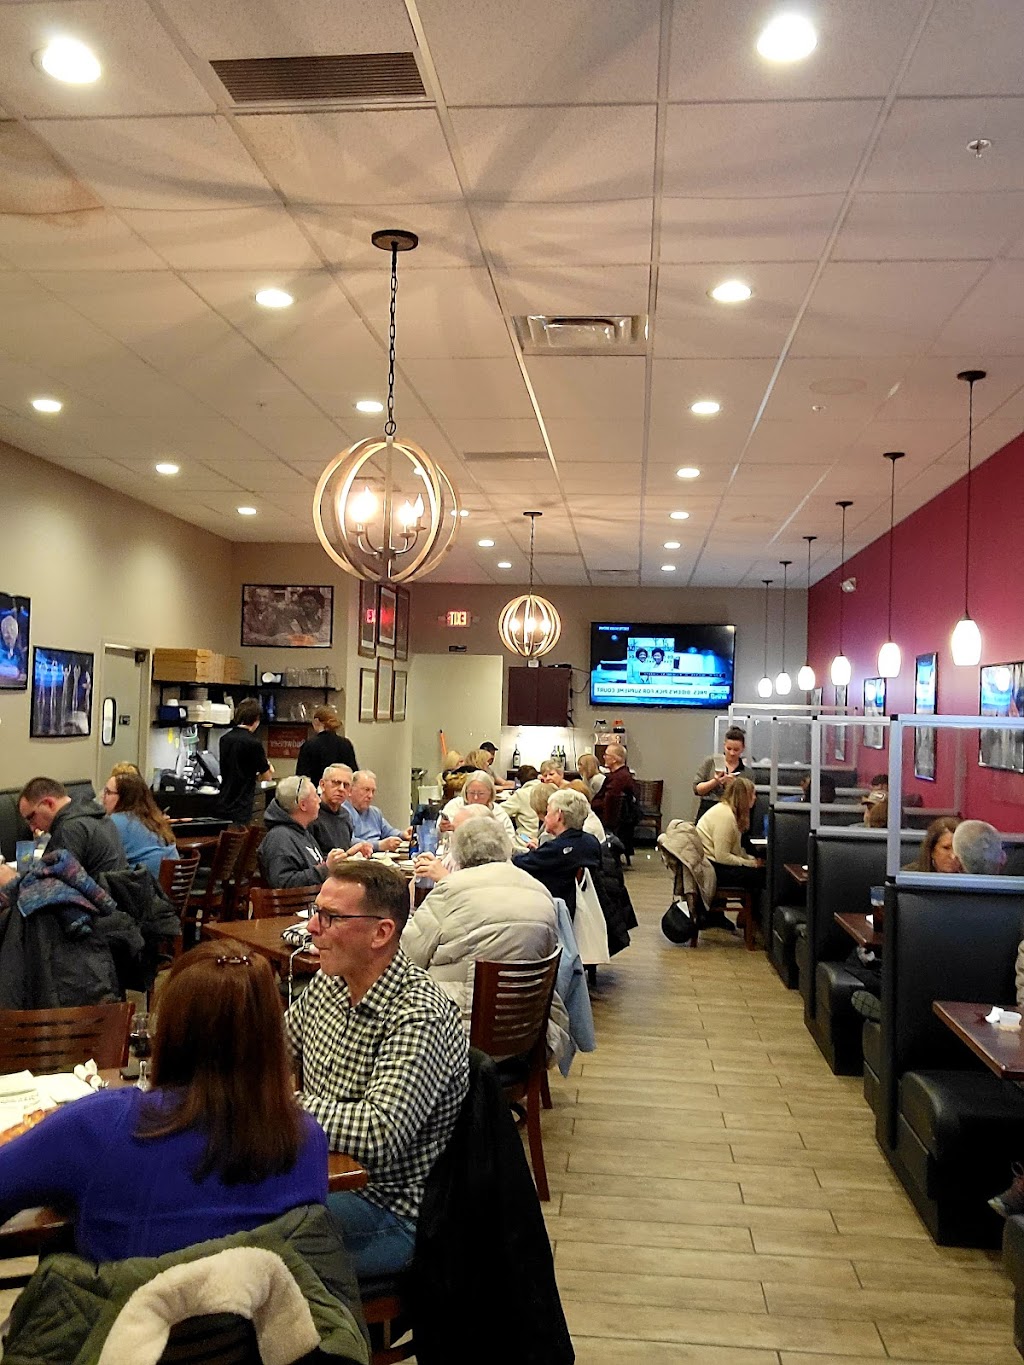 Minicos Italian Restaurant | 1180 County Line Rd, Westerville, OH 43081 | Phone: (614) 899-1100